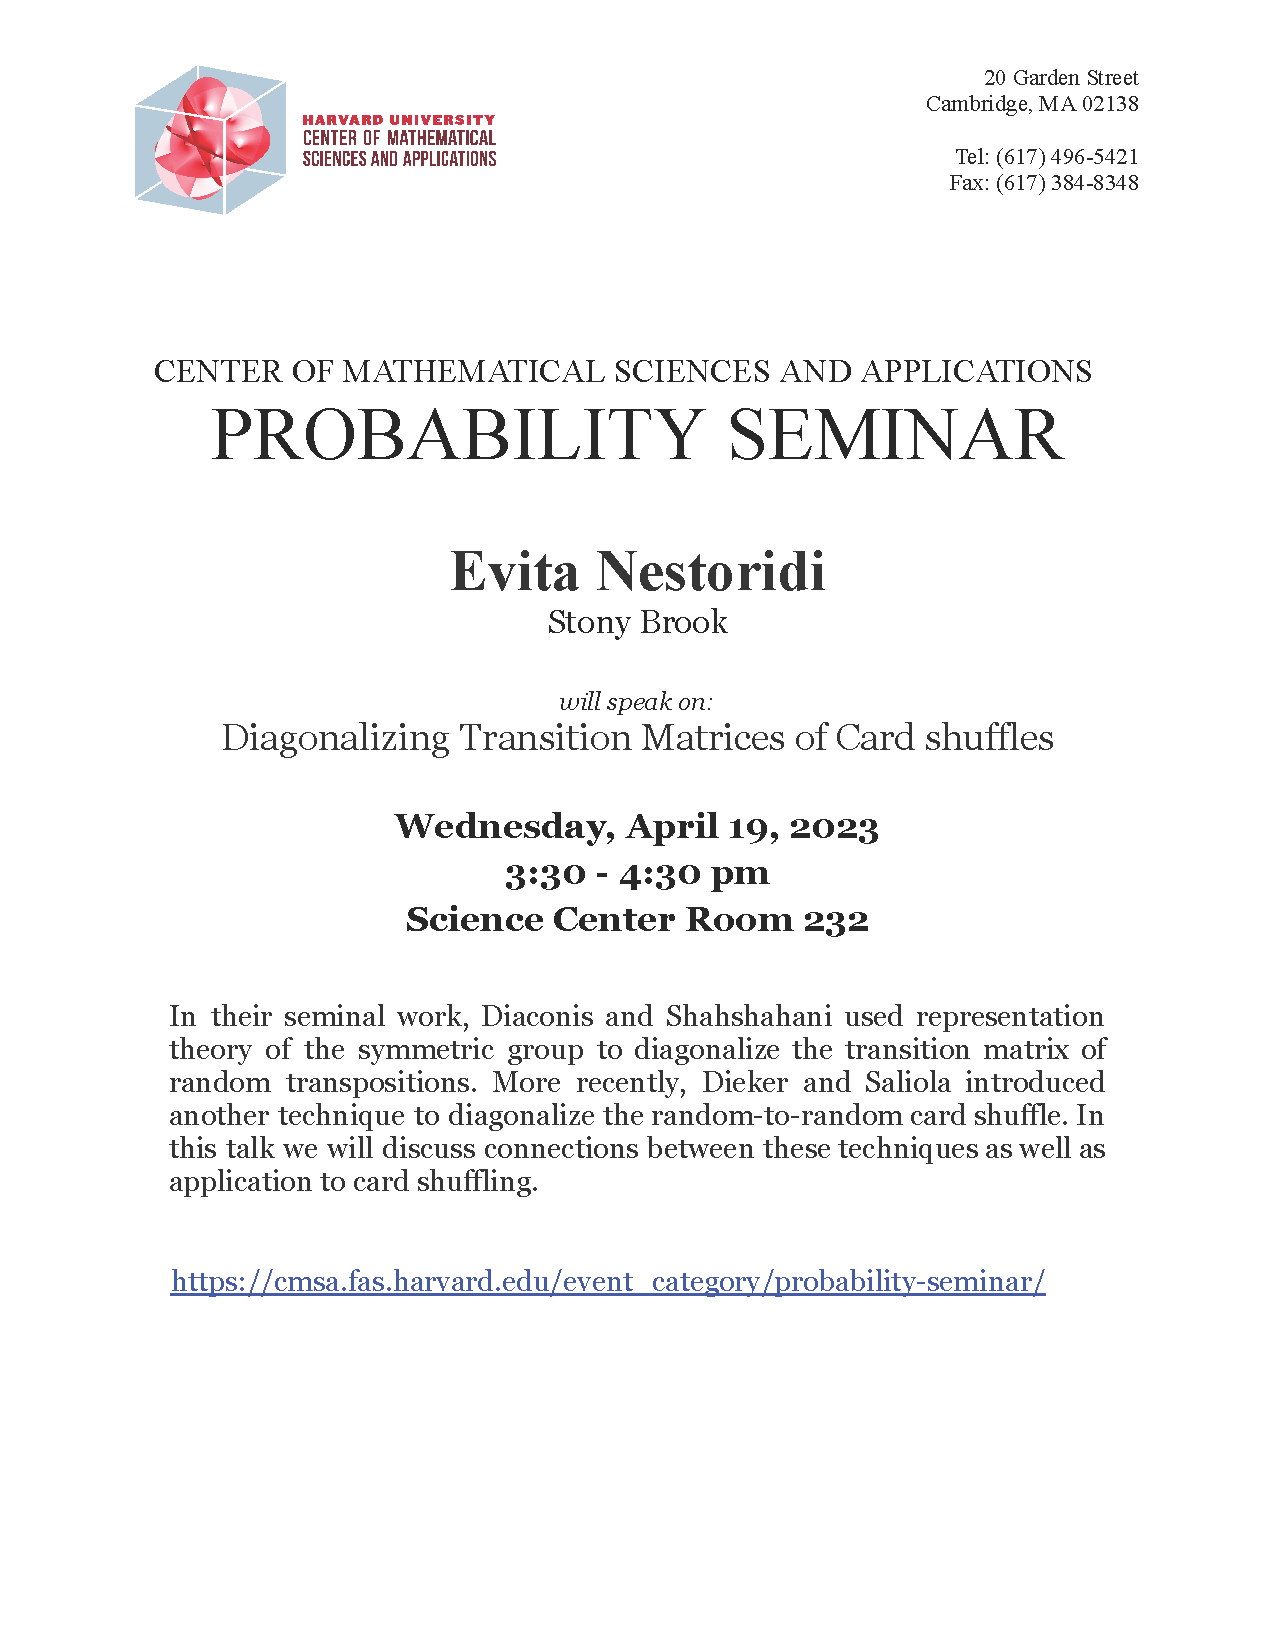 CMSA Probability Seminar 04.19.23